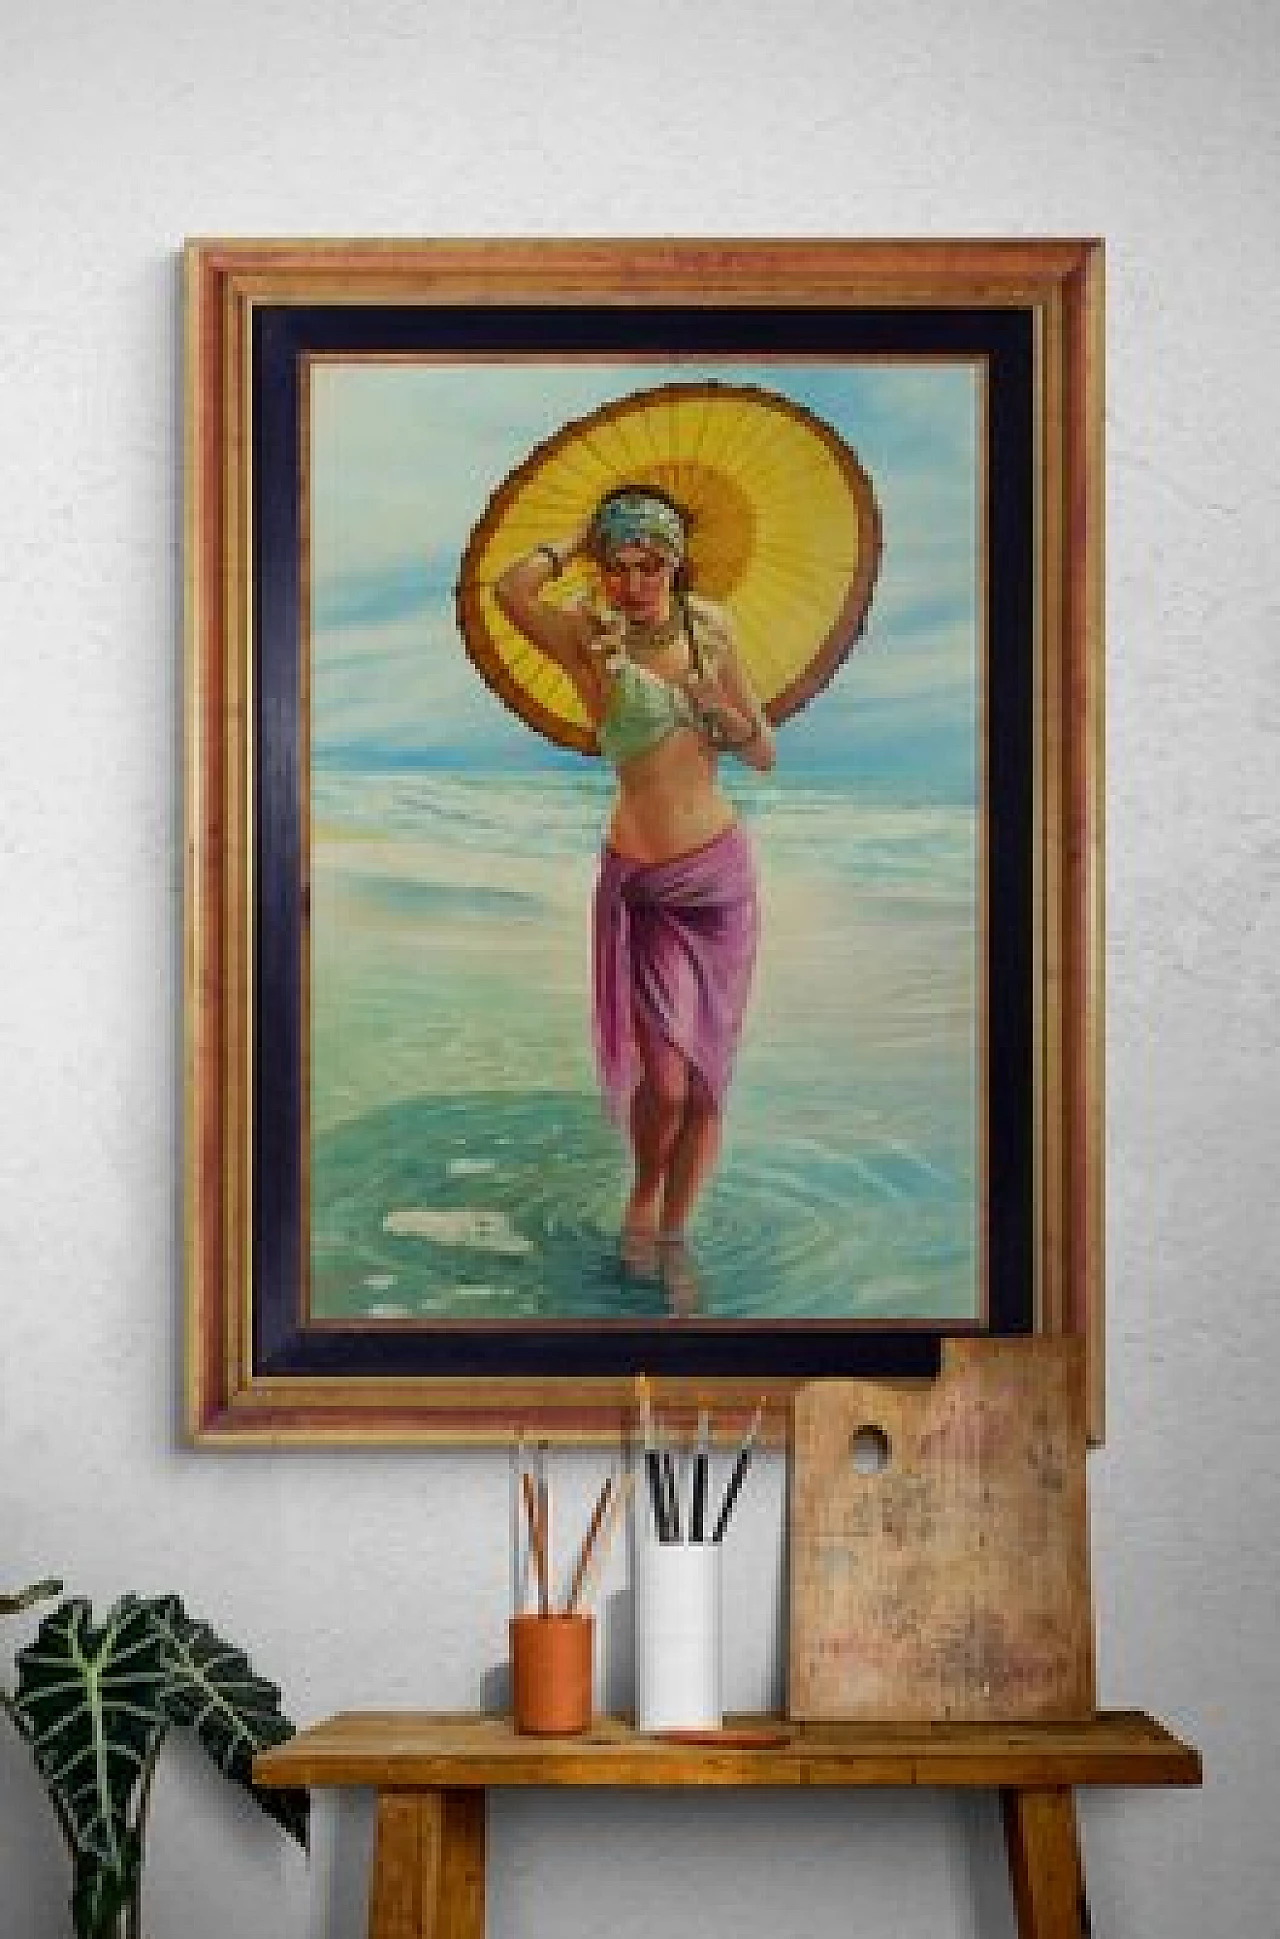 Donato Gorgero, The Yellow Umbrella, oil painting on canvas, 1980s 5